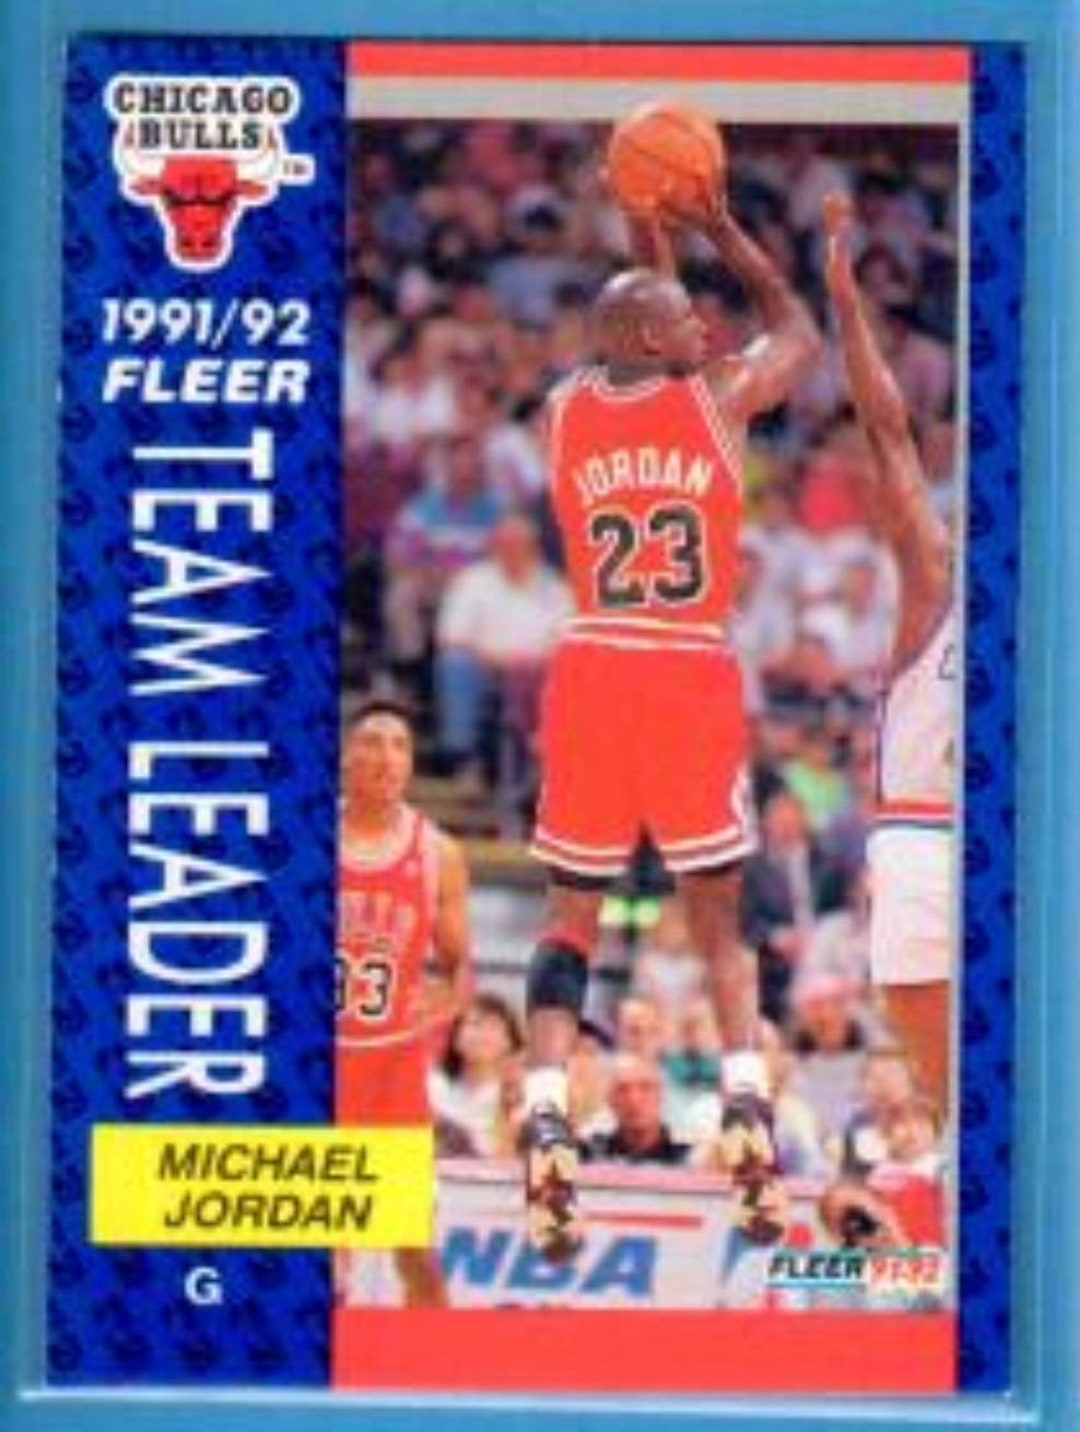 Michael Jordan 6x nba champion mvp. Greatest nba player of all